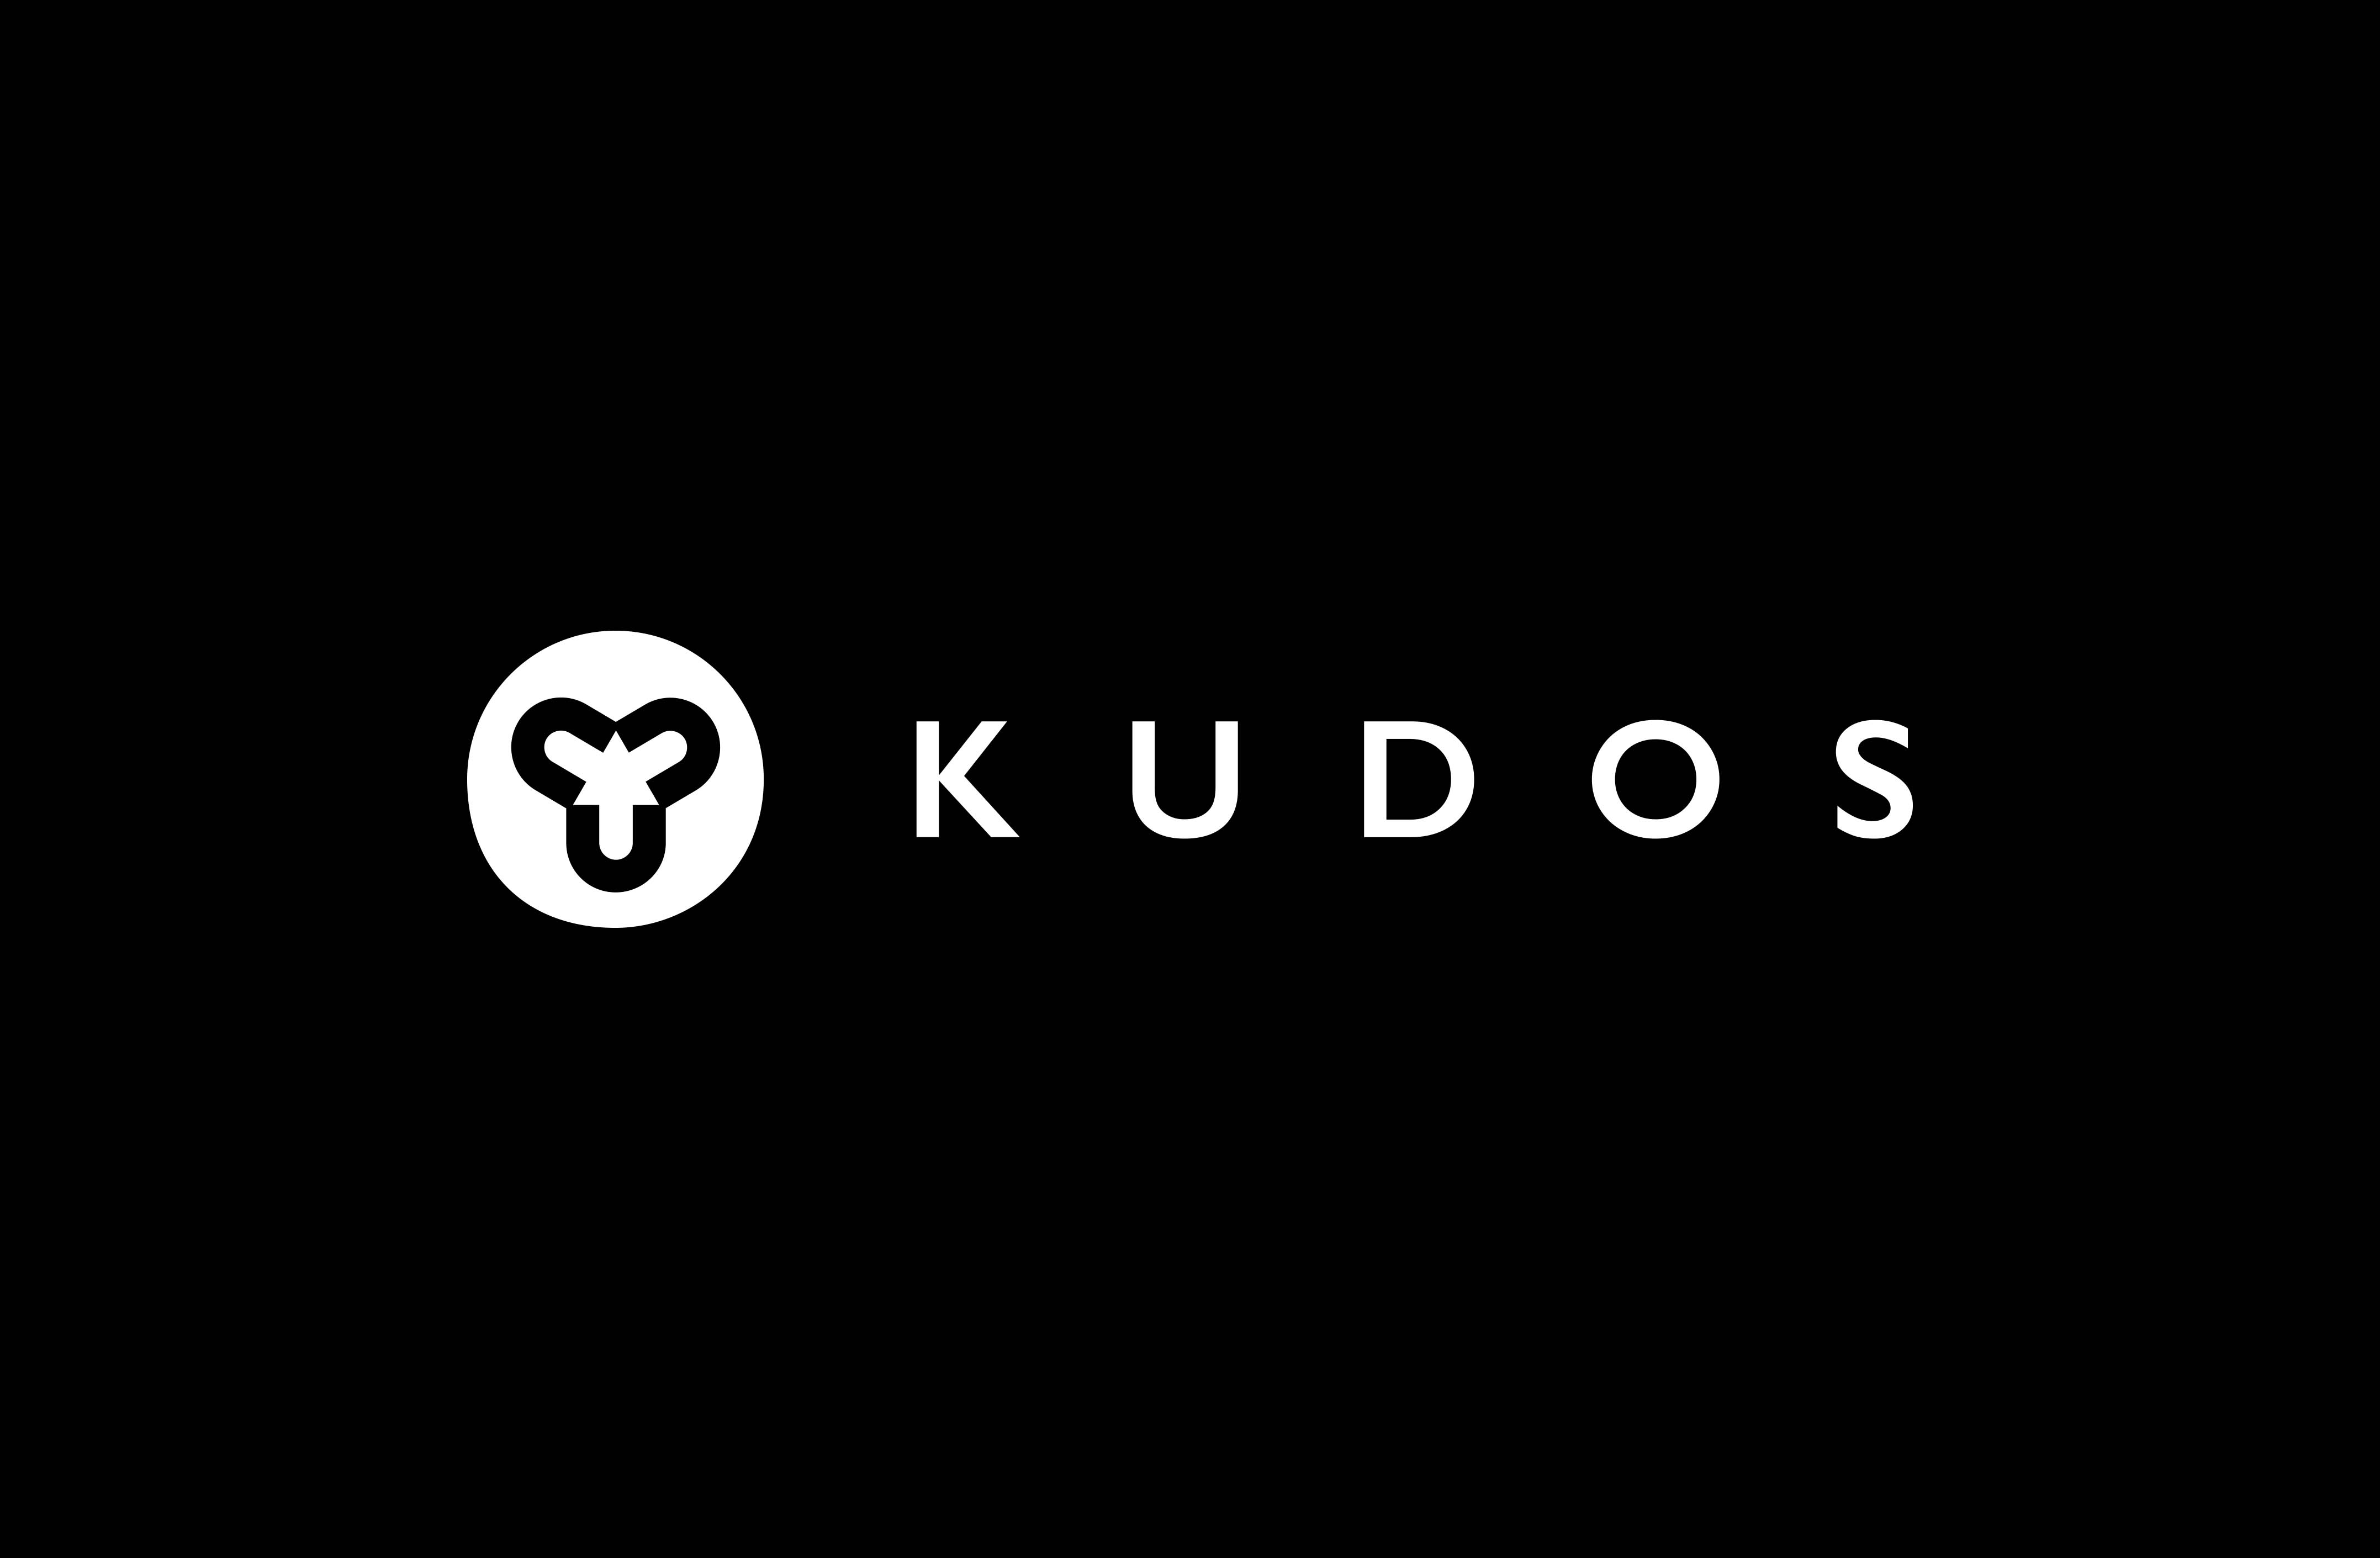 Bristol Show 2015: Kudos press launch